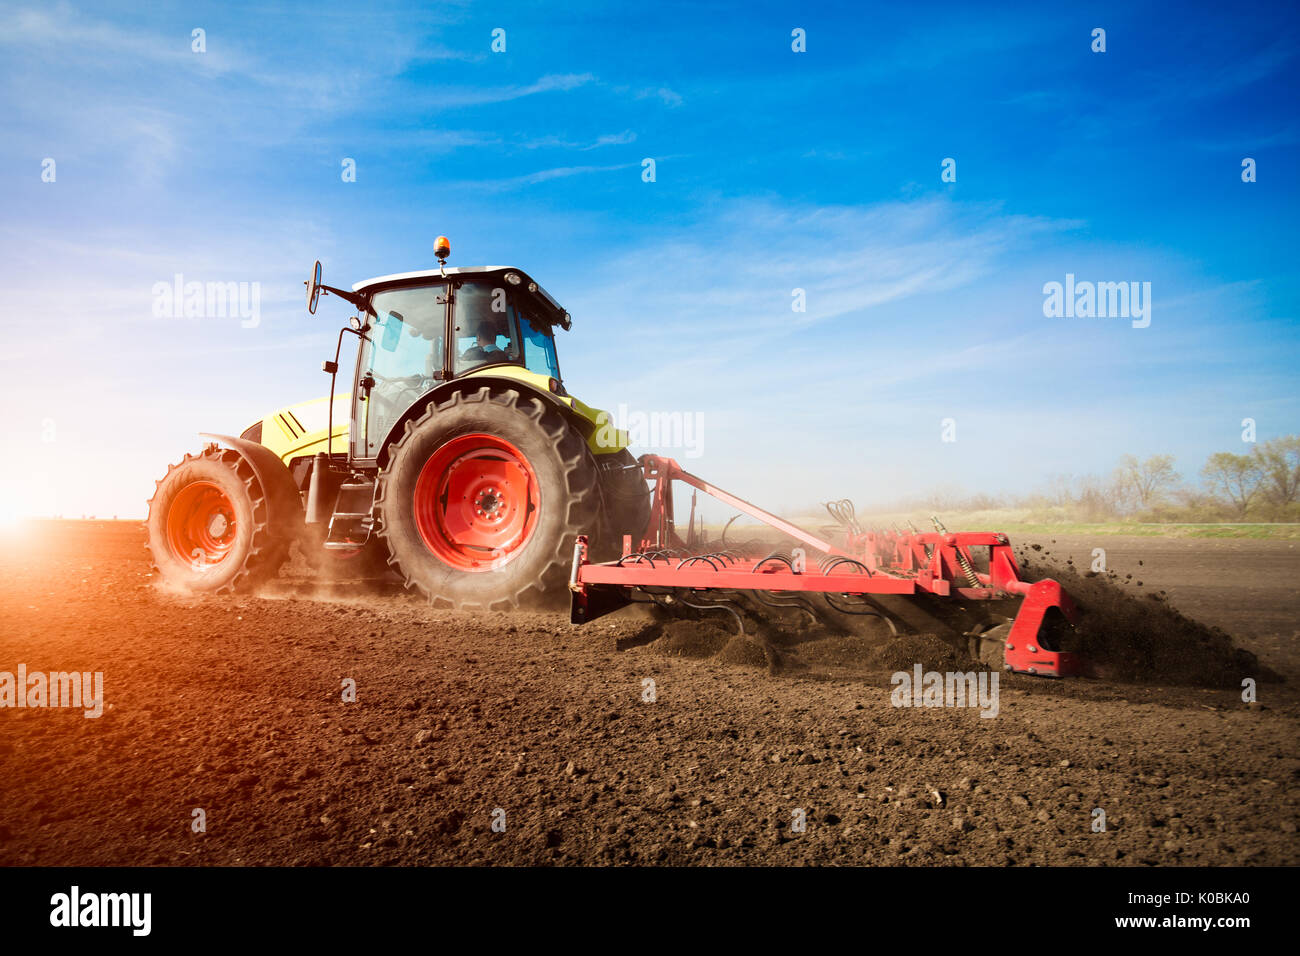 Tractor working on farm land on sunset Stock Photo